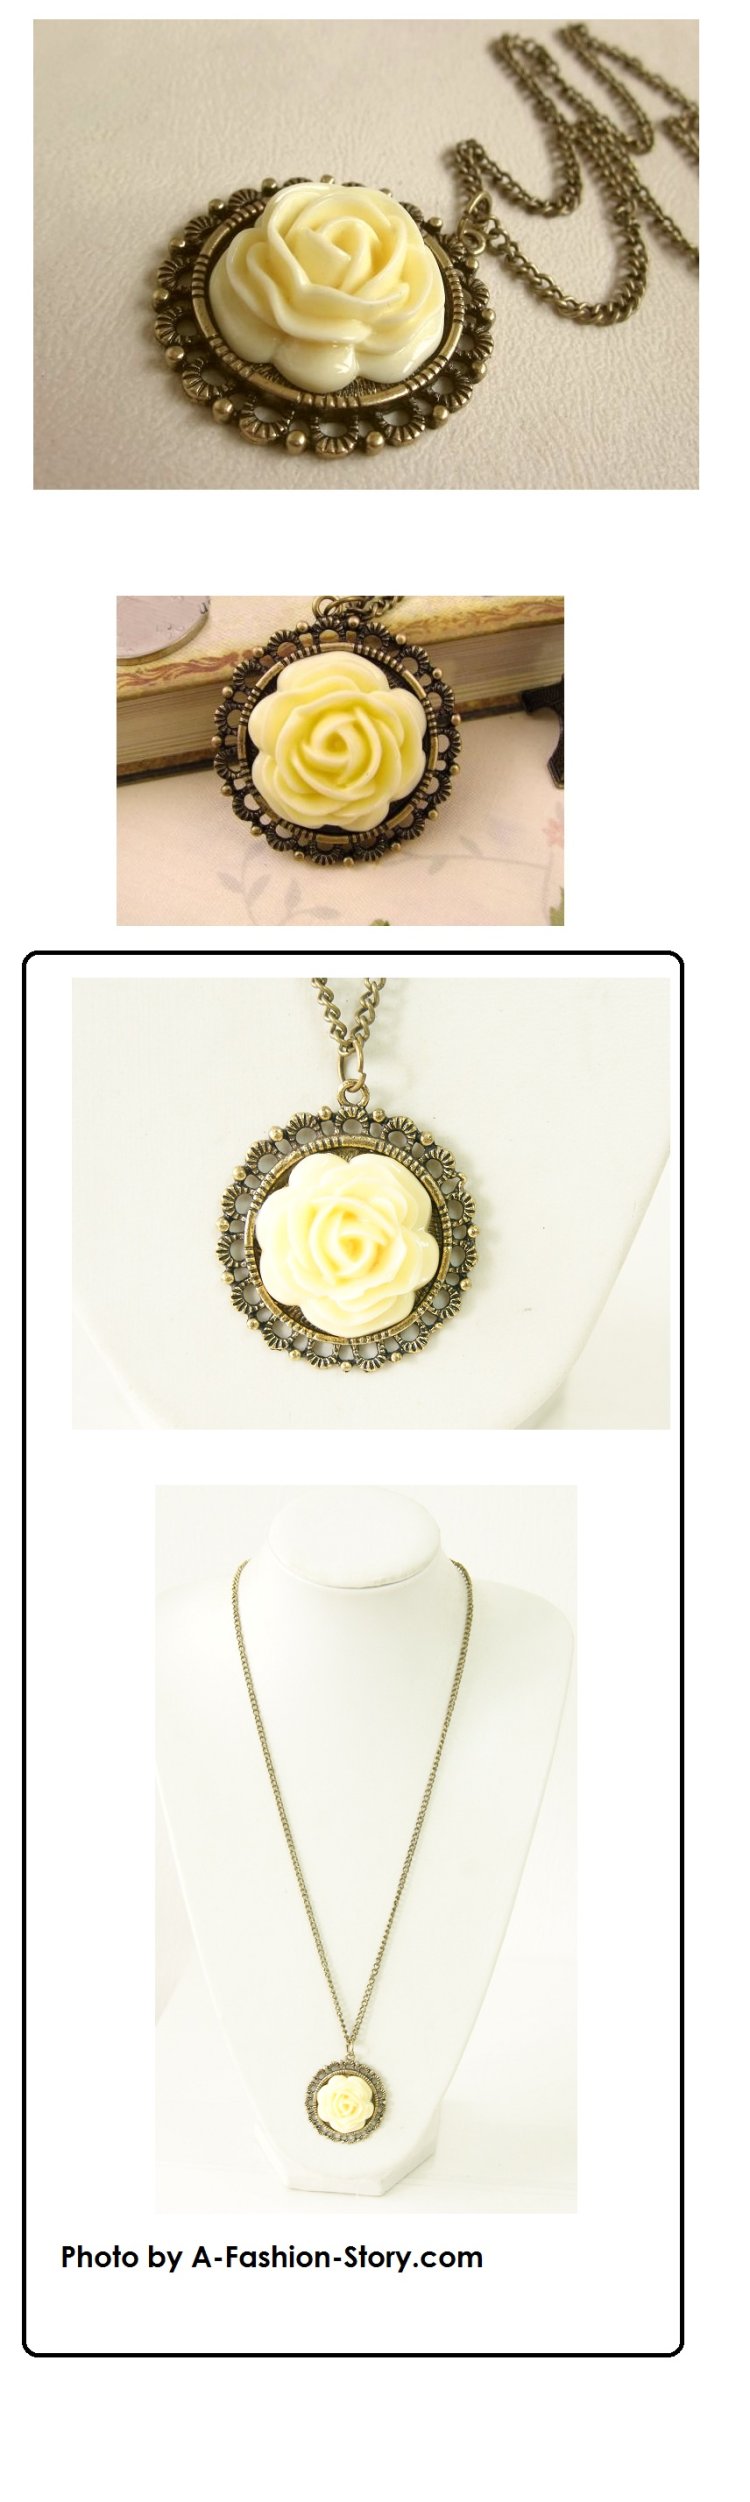 C10123139 Malaysia choker necklace online shop blogshop wholesal